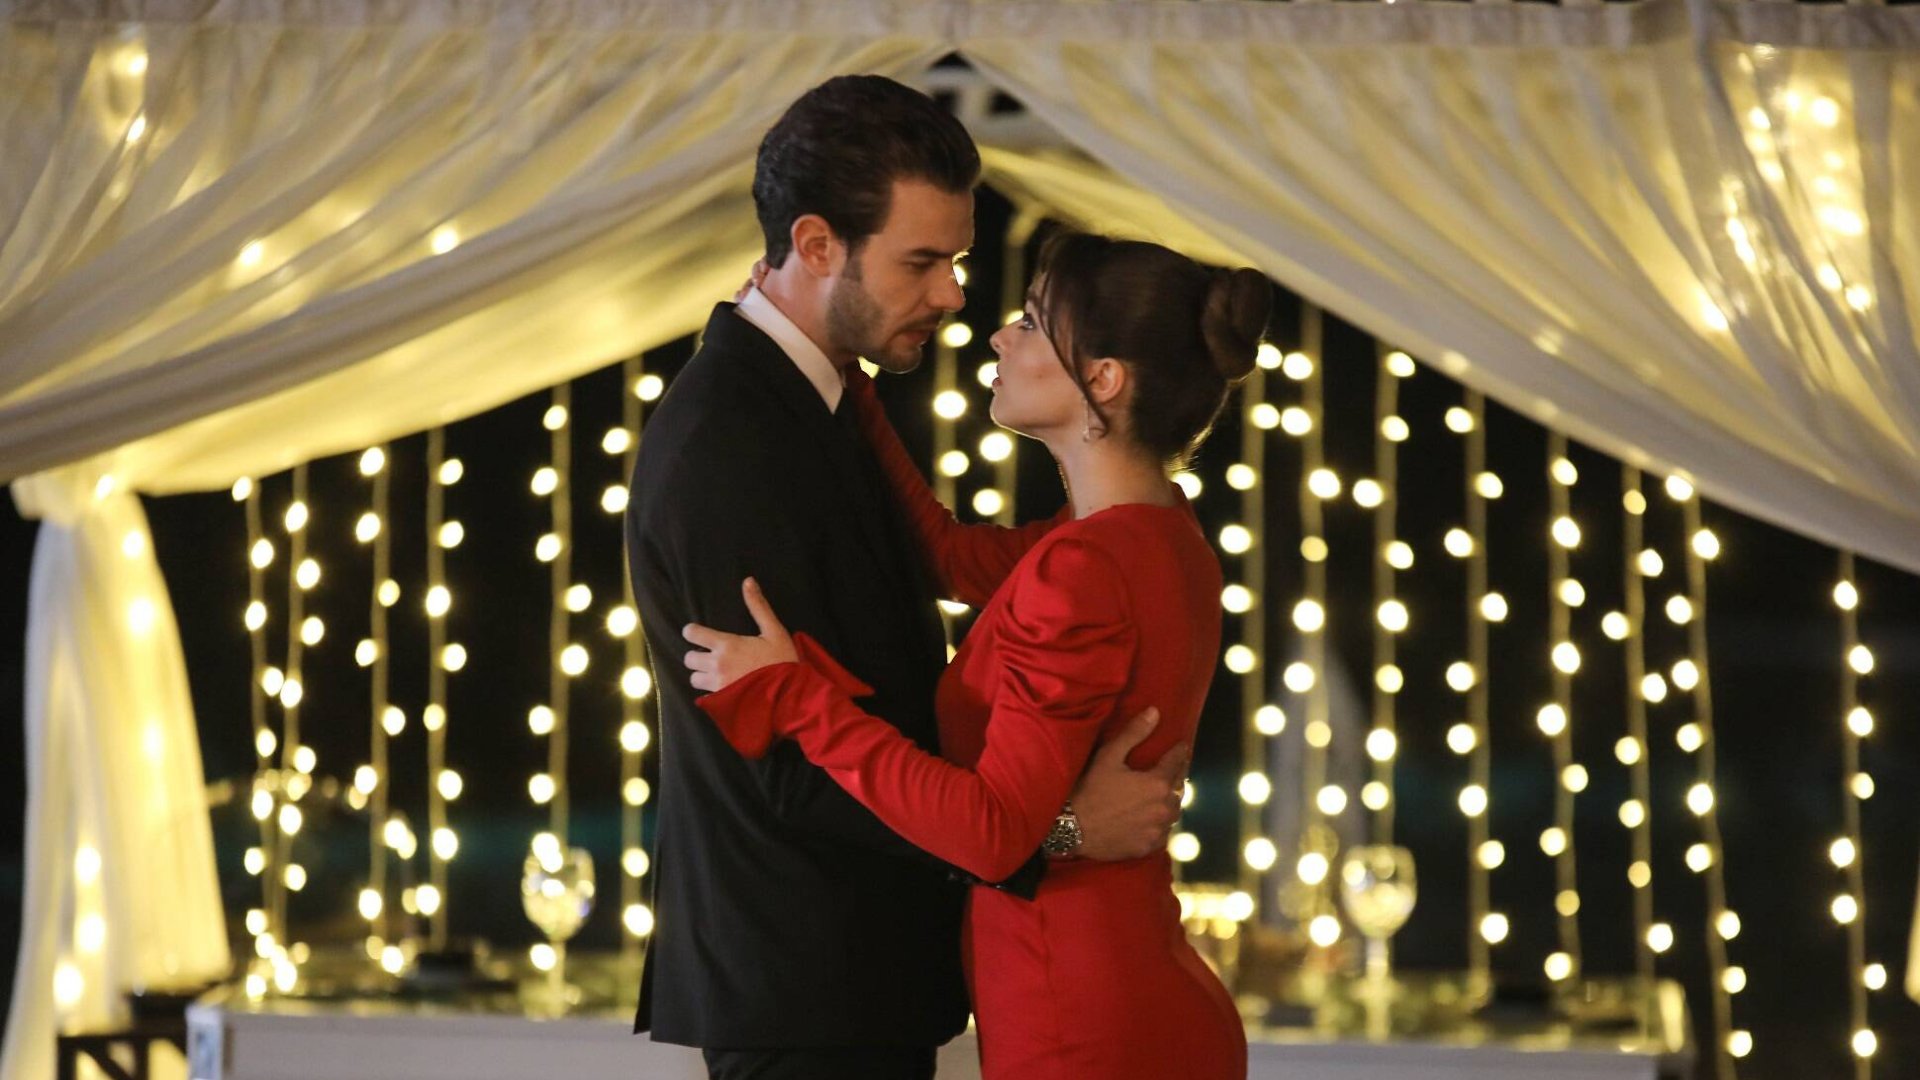 Séries turcas de romance na Netflix: confira lista